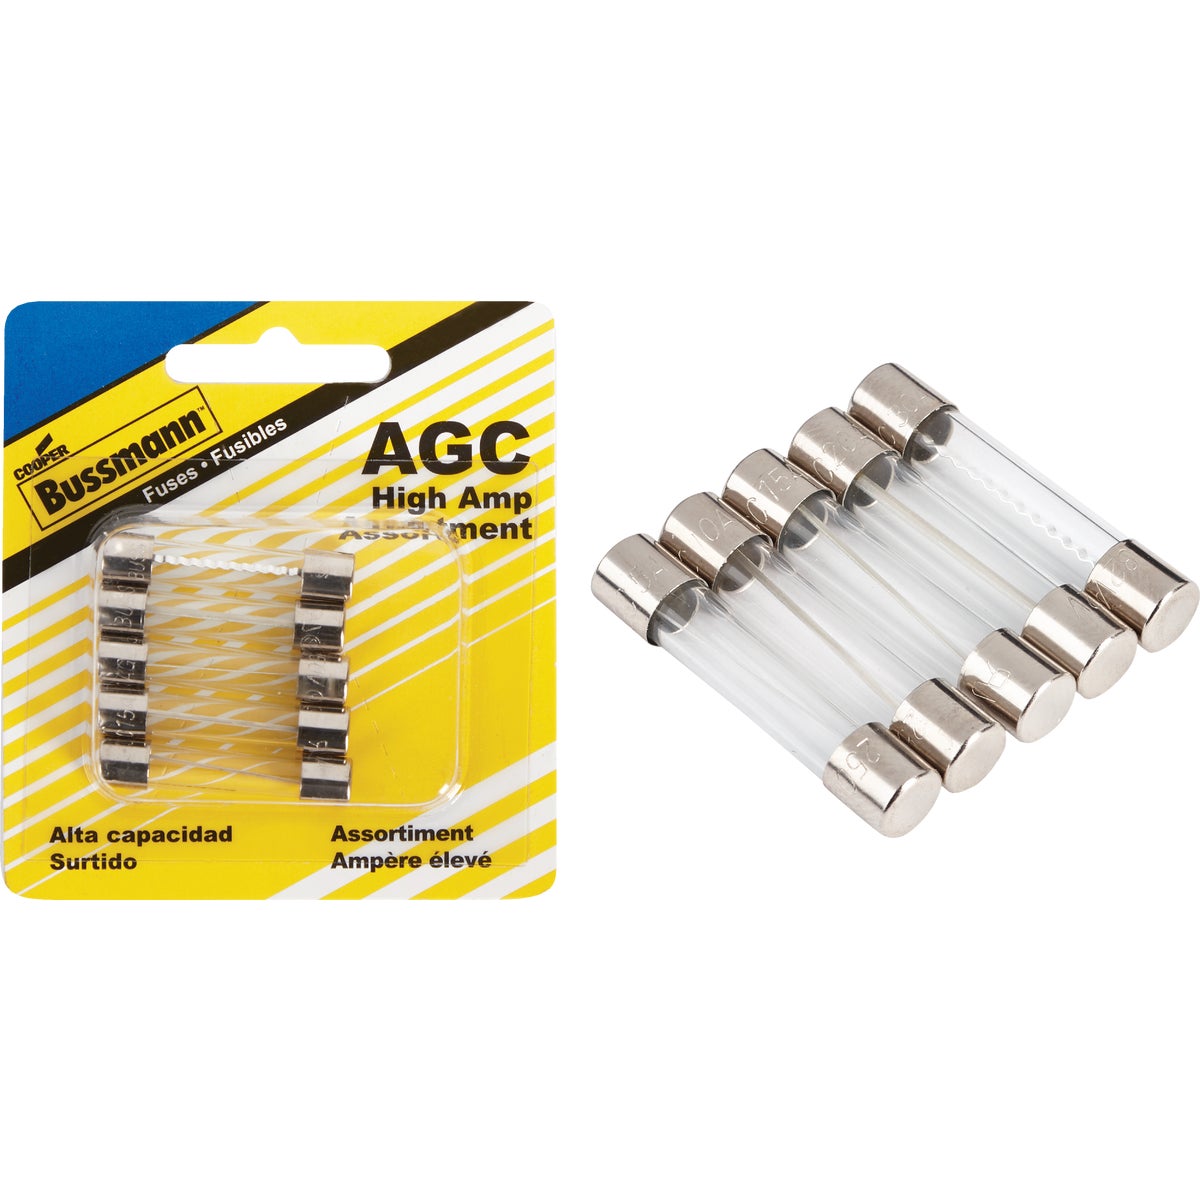 Item 570648, Contains 1 each: AGC-5, AGC-10, AGC-15, AGC-20, and AGC-30